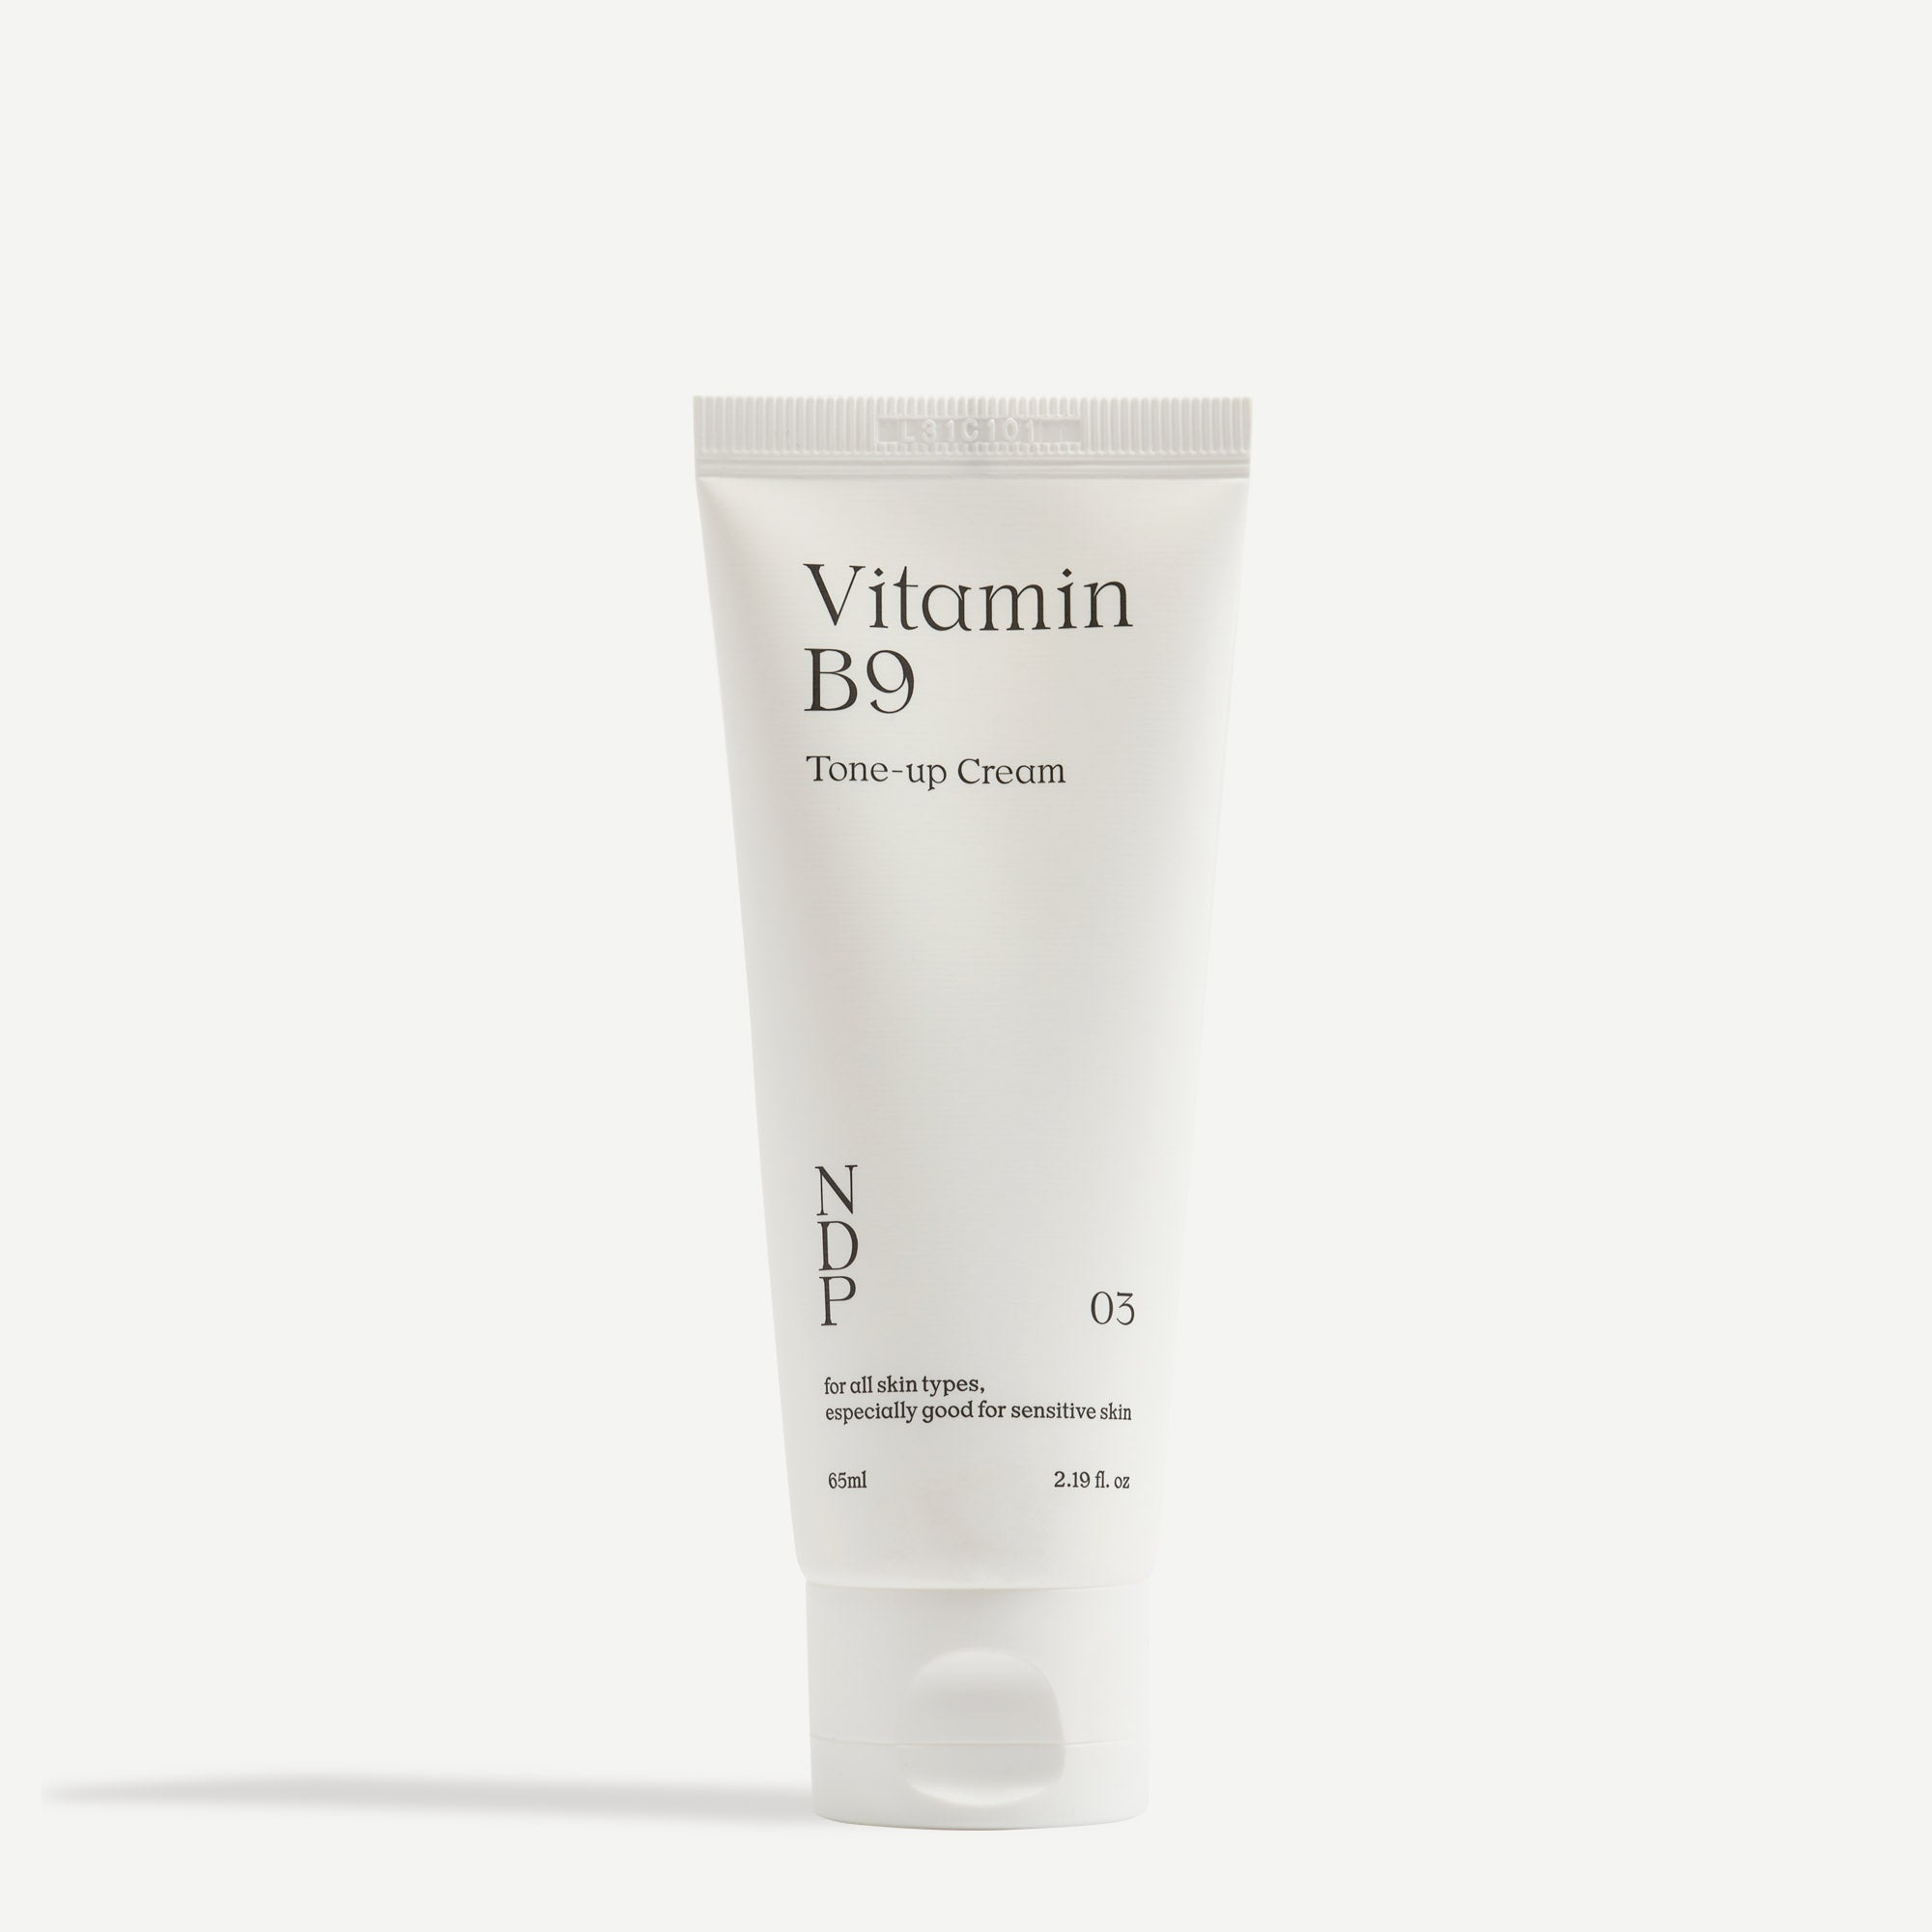 K-beauty Natural derma project Vitamin B9 Tone-up cream especially good for sensitive skin.